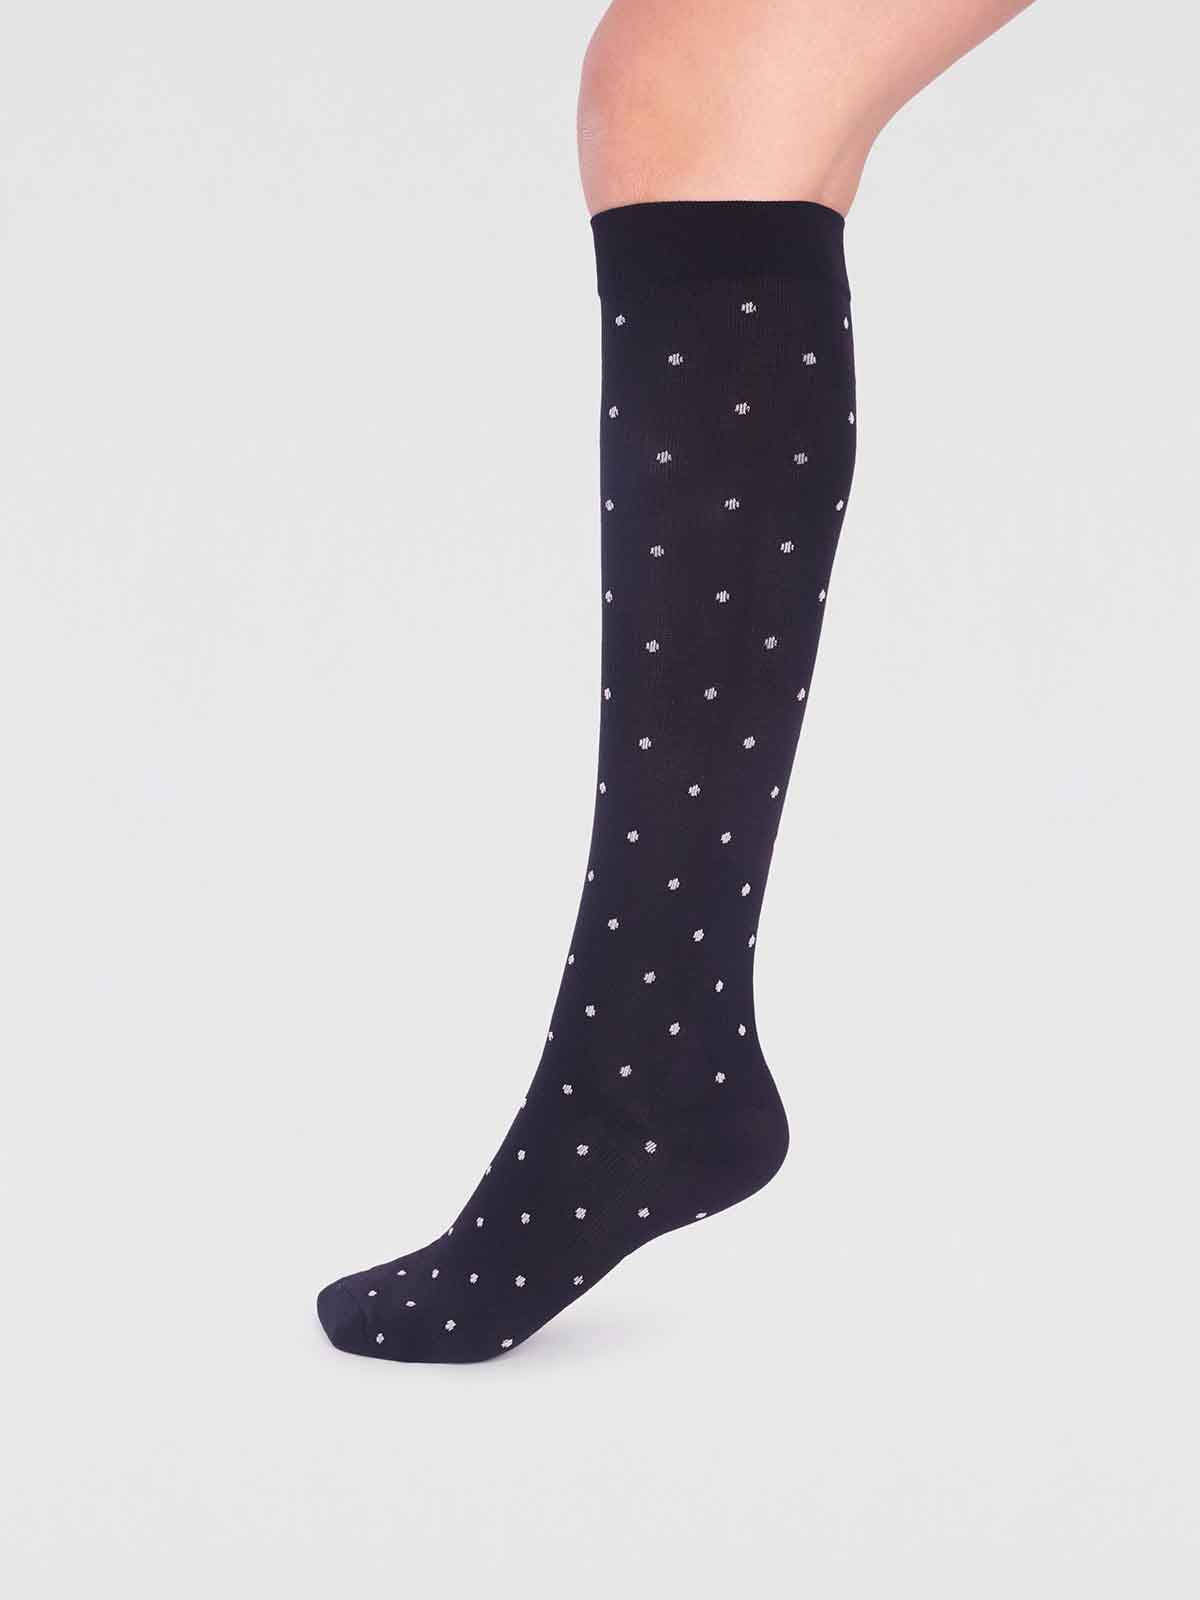 Sustainable Fibre Women's Flight Compression Socks in Spotty Black